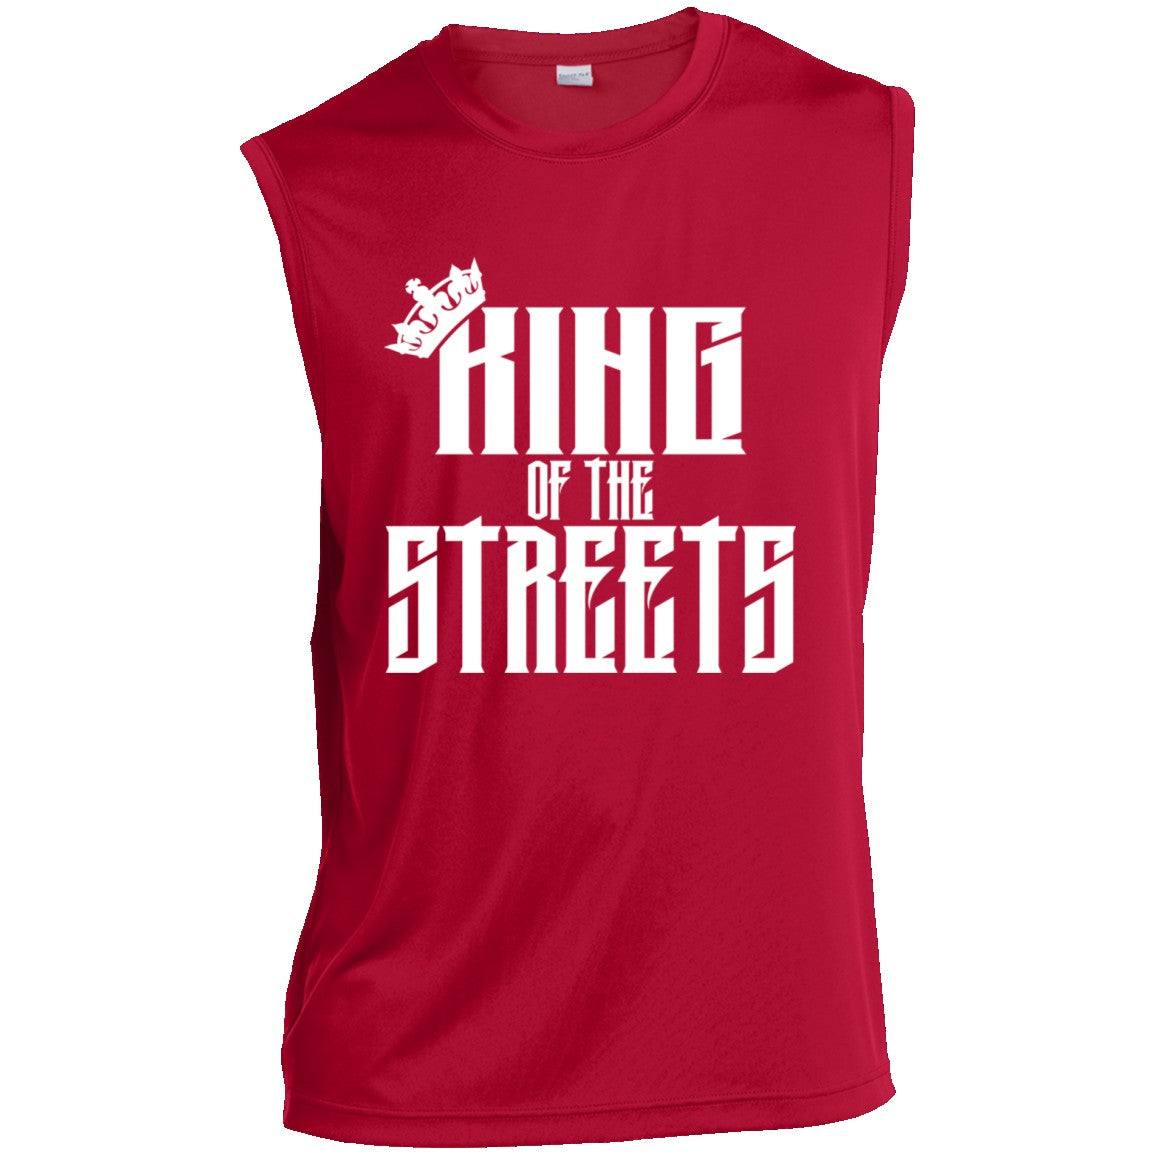 King of the Streets Sleeveless Performance T-Shirt CustomCat